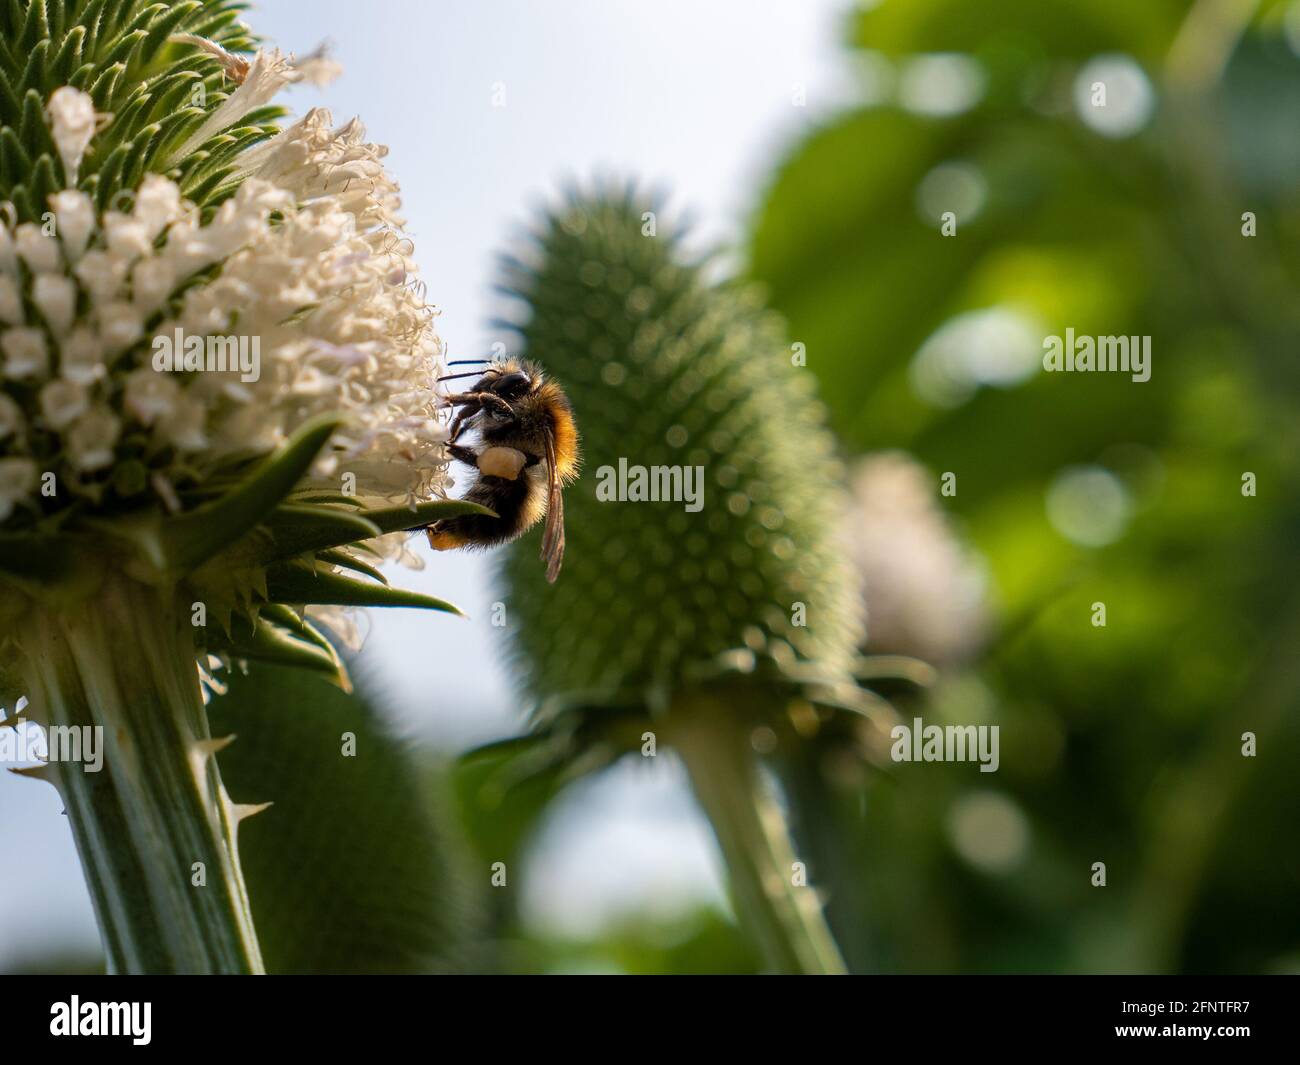 Bumblebee pollinating cutleaf teasel flower (Dipsacus laciniatus) Stock Photo